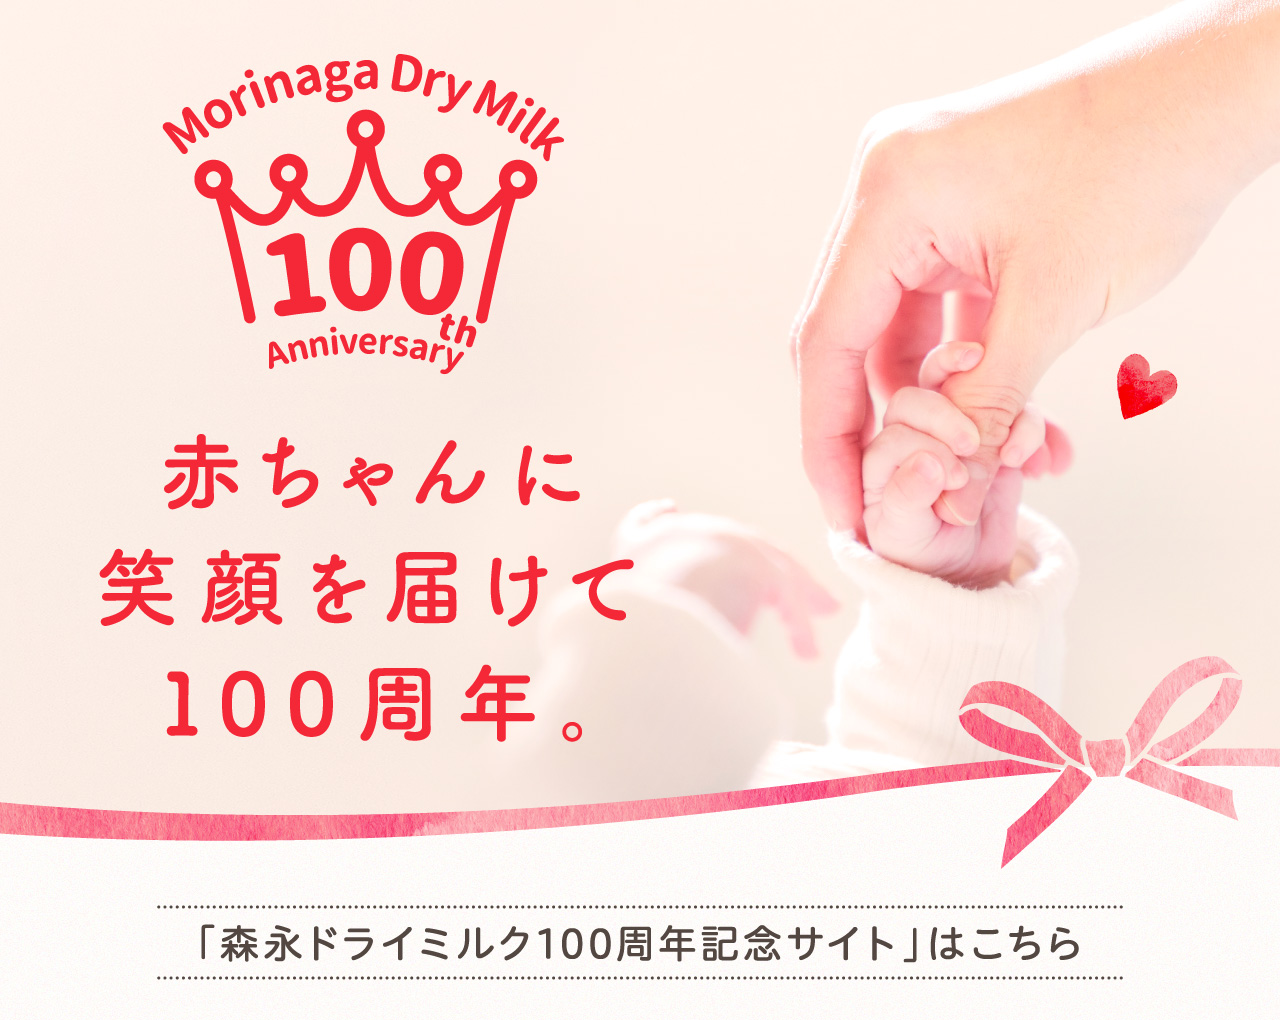 Morinaga Dry Milk 100th Anniversary 赤ちゃんに笑顔を届けて100周年。